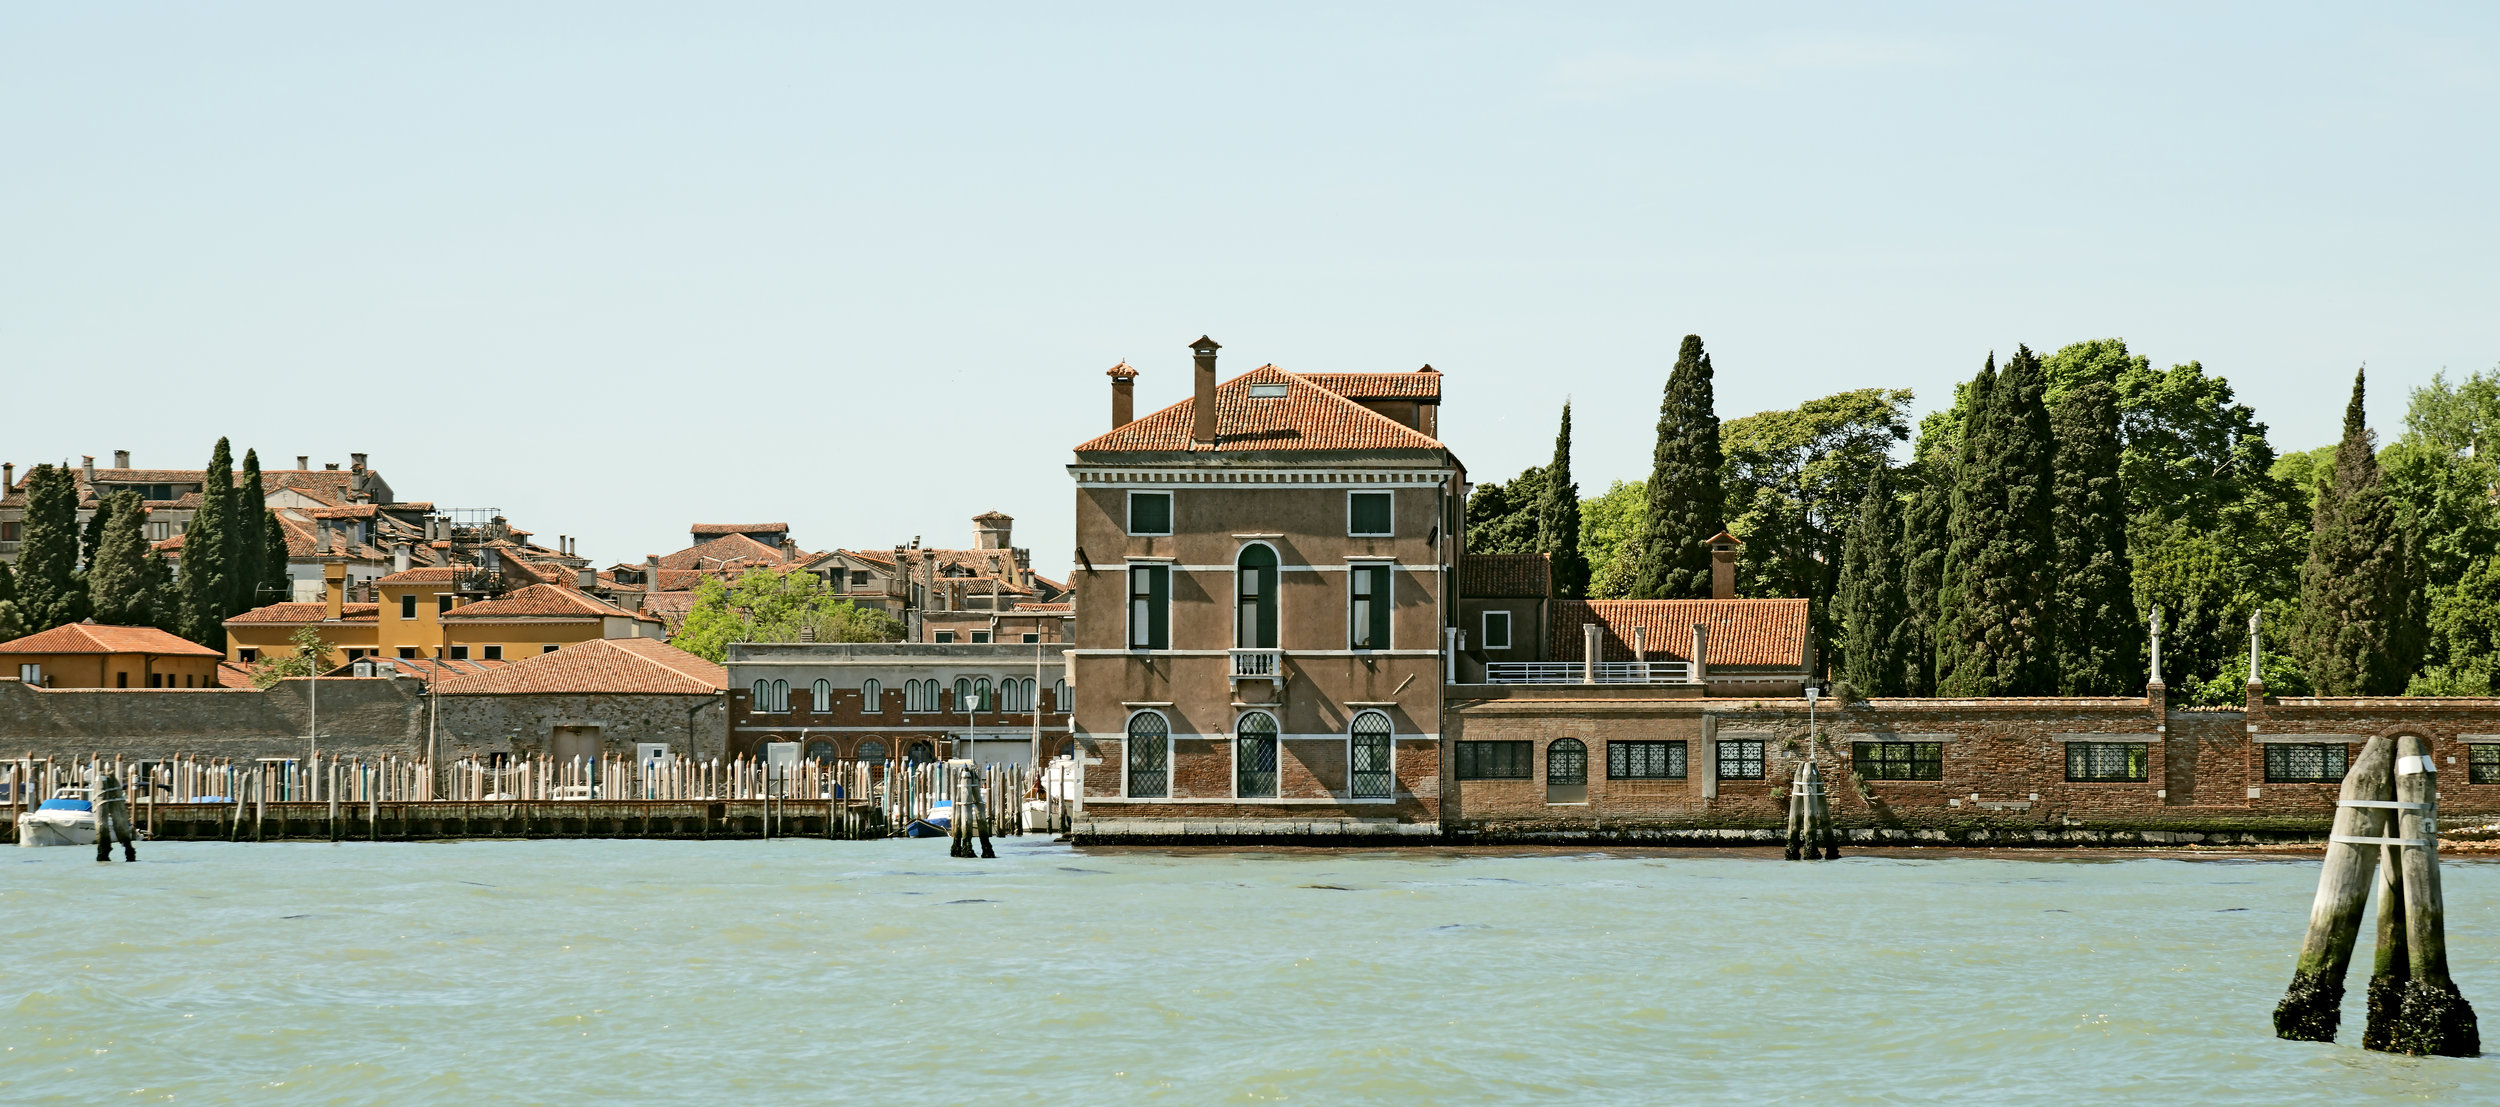 The Casino degli Spiriti, as seen from the water, Venice, Italy